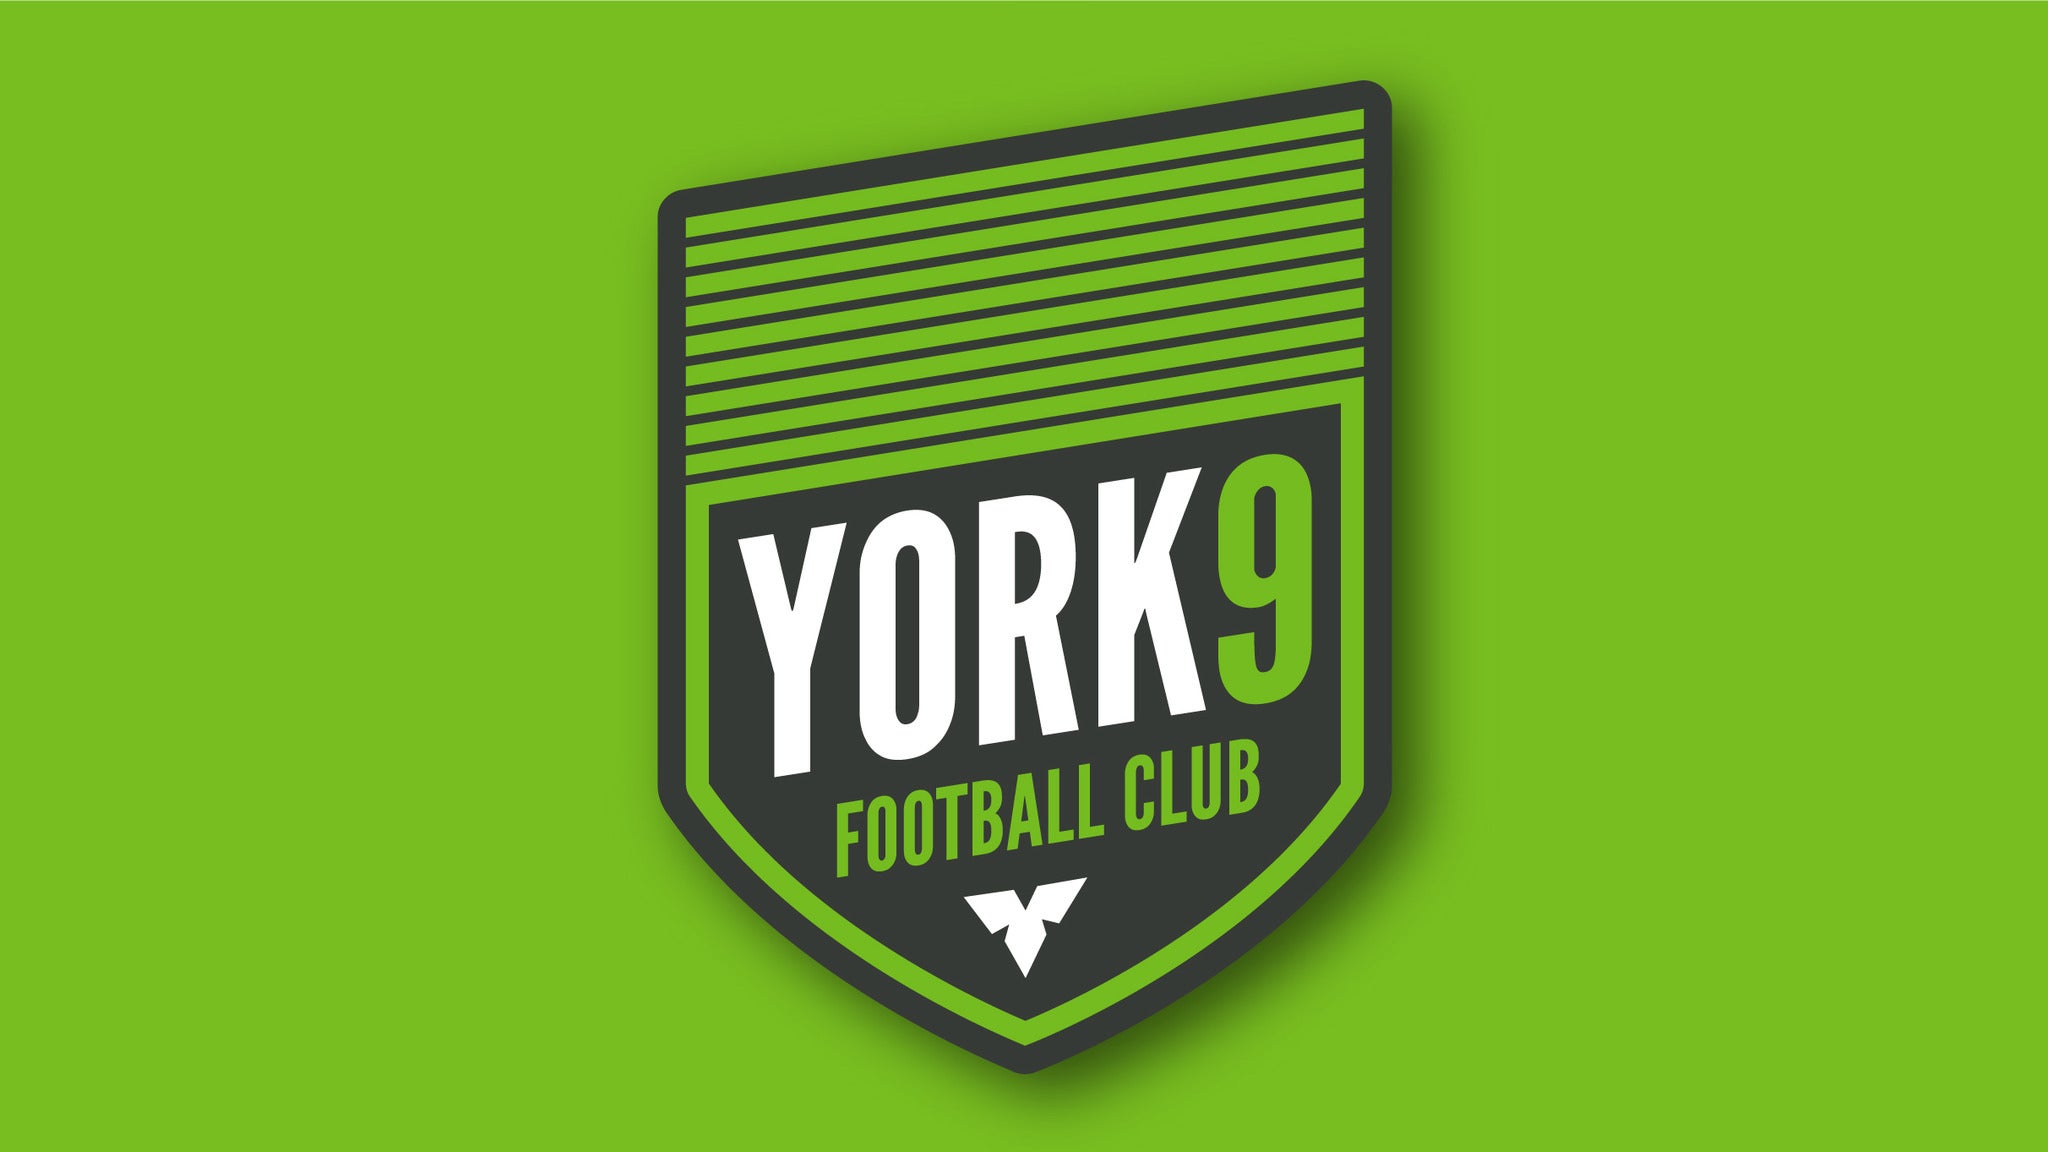 York9 FC vs. Pacific FC in Toronto promo photo for National presale offer code